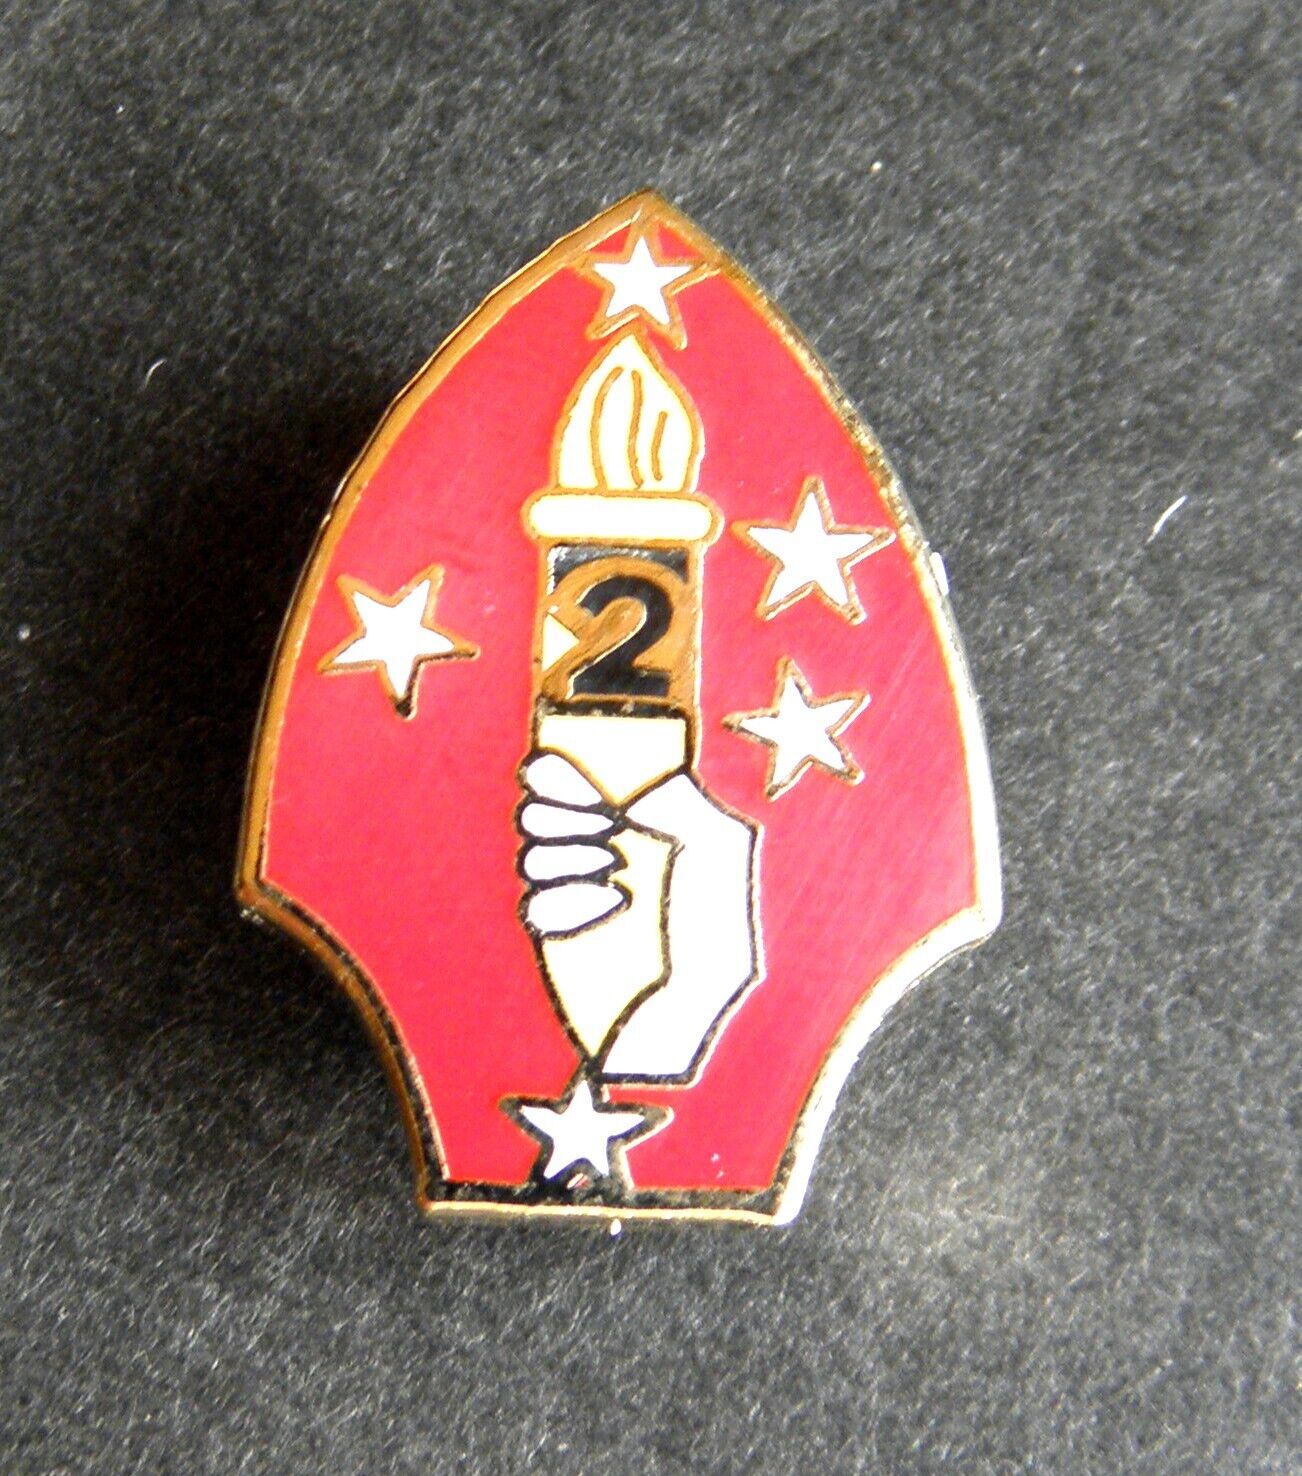 VIETNAM 2nd MARINE DIVISION MARDIV Marines Mini Lapel Pin Badge 5/8 x 7/8 inch